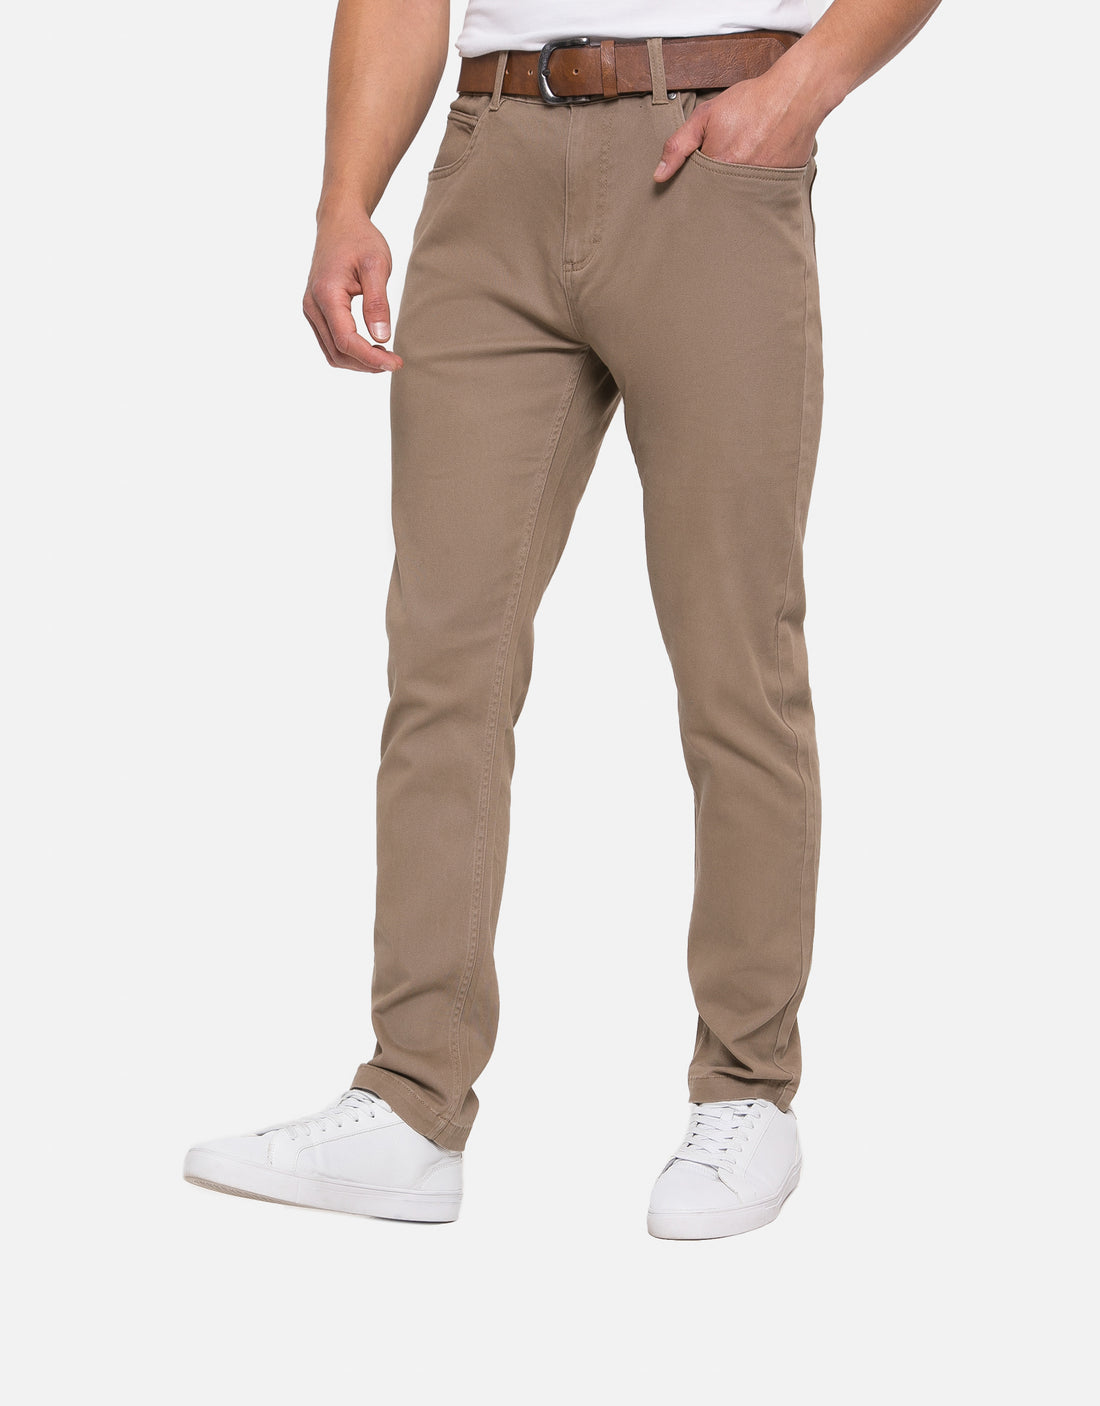 Gueuusu Mens Tactical Hiking Belted Cargo Pants Skinny Slim Fit Trousers -  Walmart.com